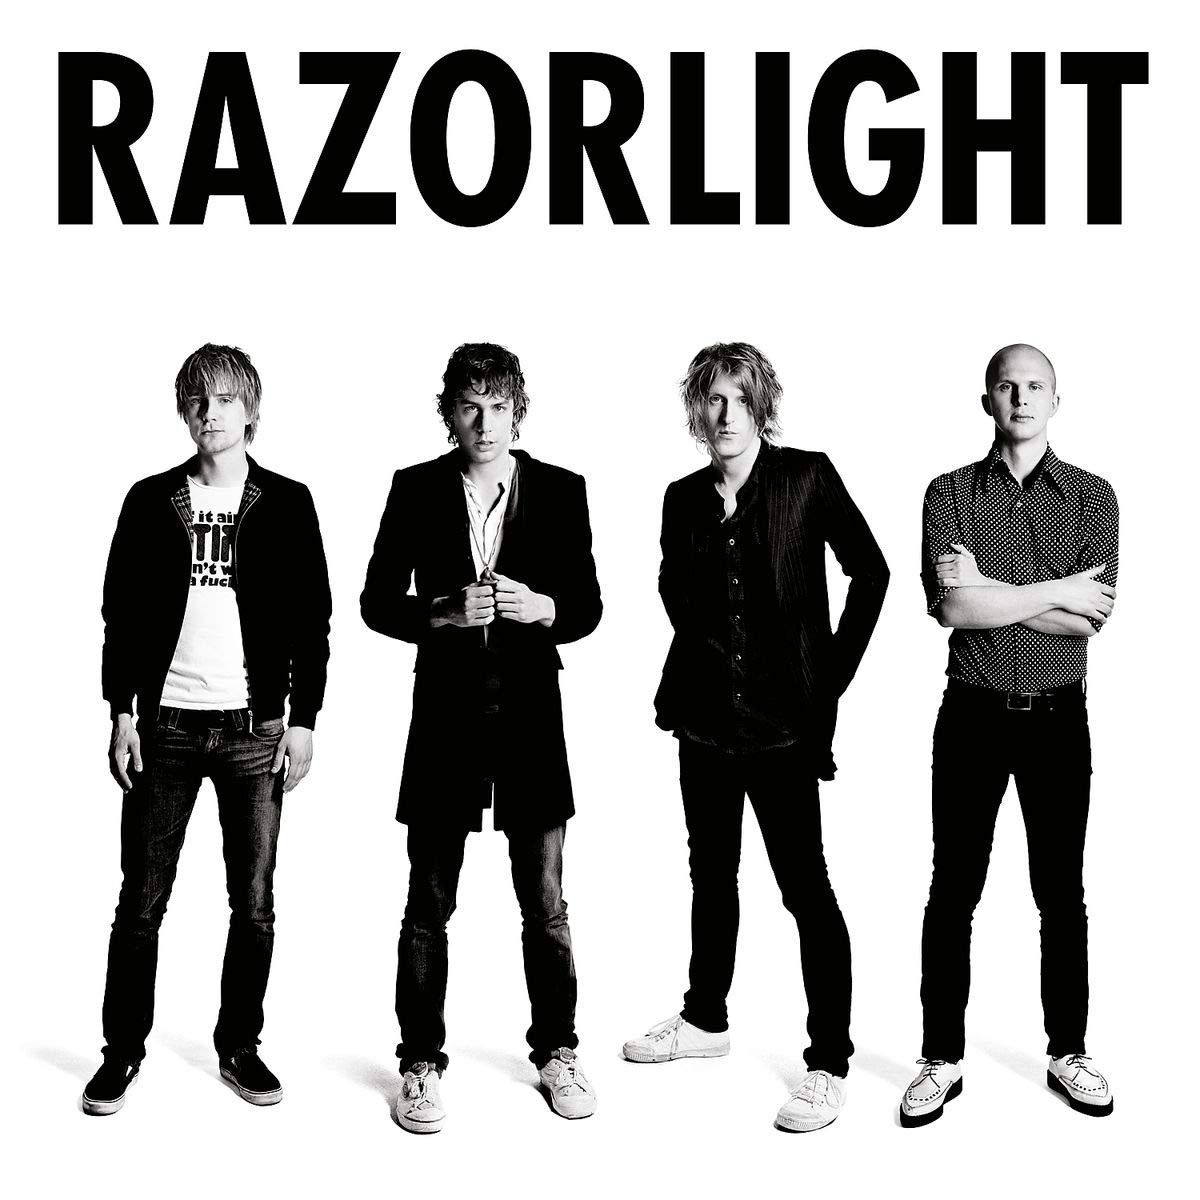 RAZORLIGHT - RAZORLIGHT - VINYL LP - Wah Wah Records